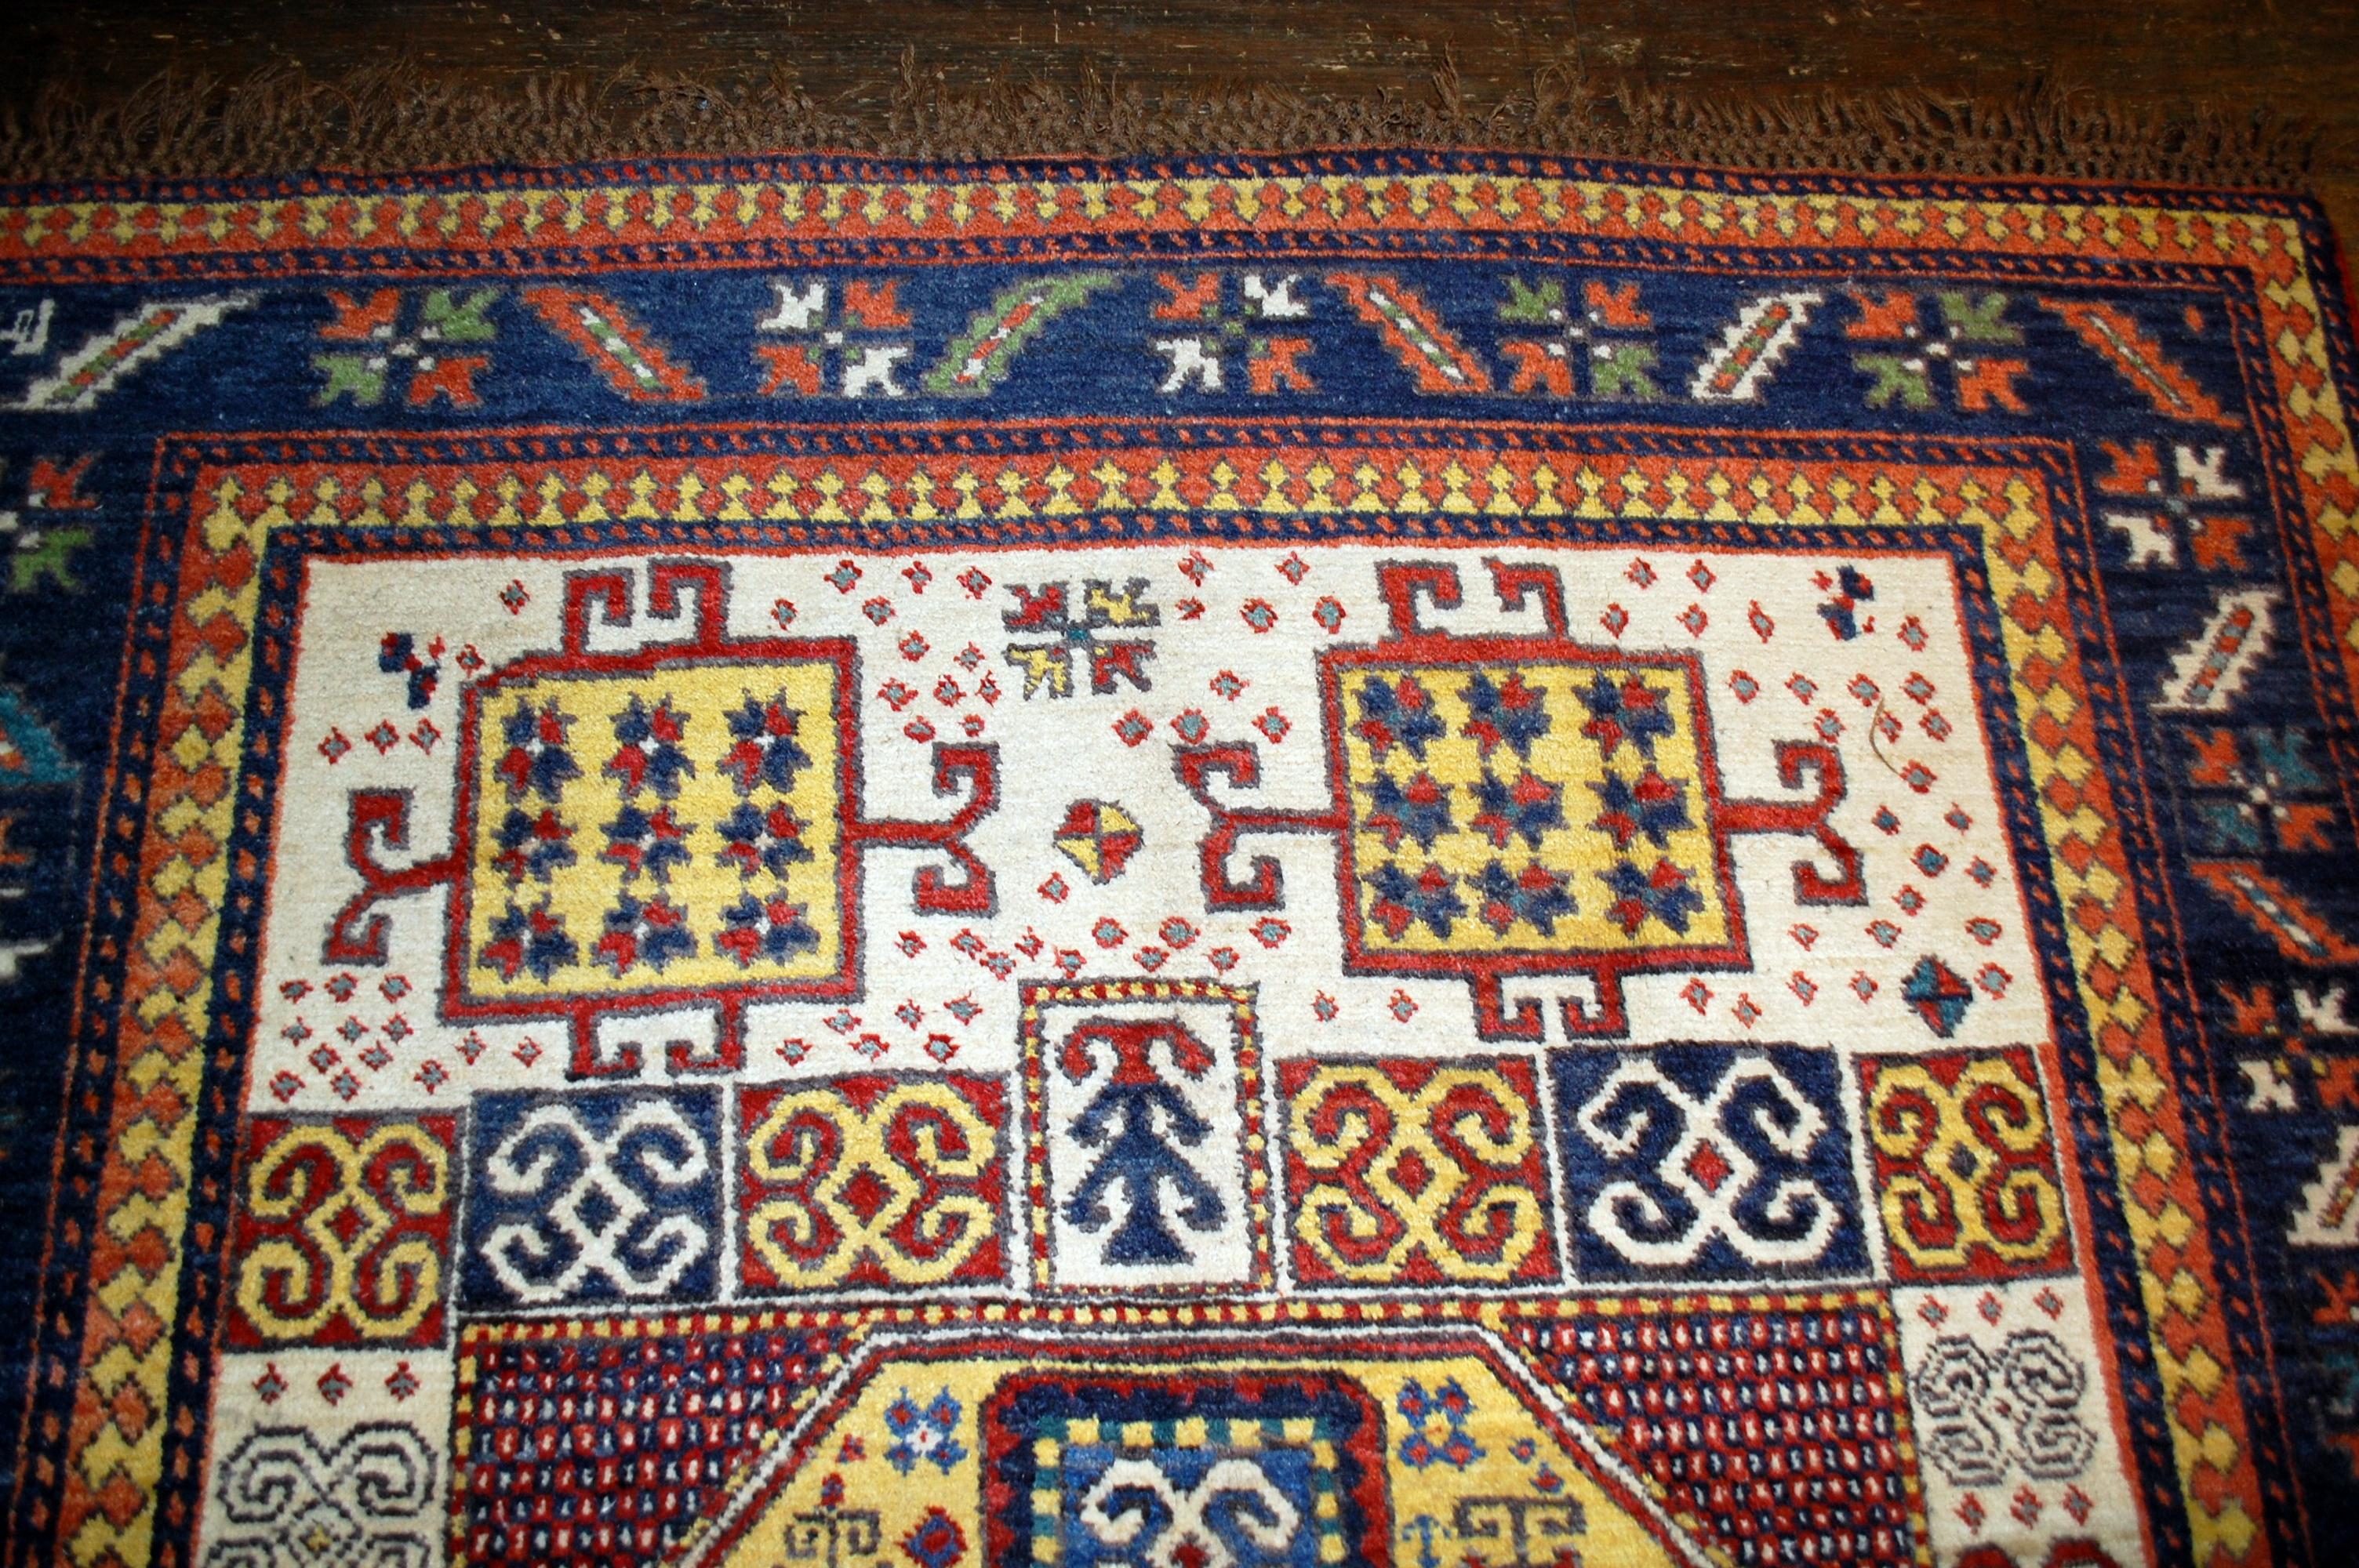 Antique handmade Caucasian Kazak Karachov rug in original condition. The rug made in tribal design with very interesting bright yellow medallion. 

-condition: original good, 

-circa 1940s,

-size: 5.9' x 7.9' ( 180cm x 241cm ),

-material: